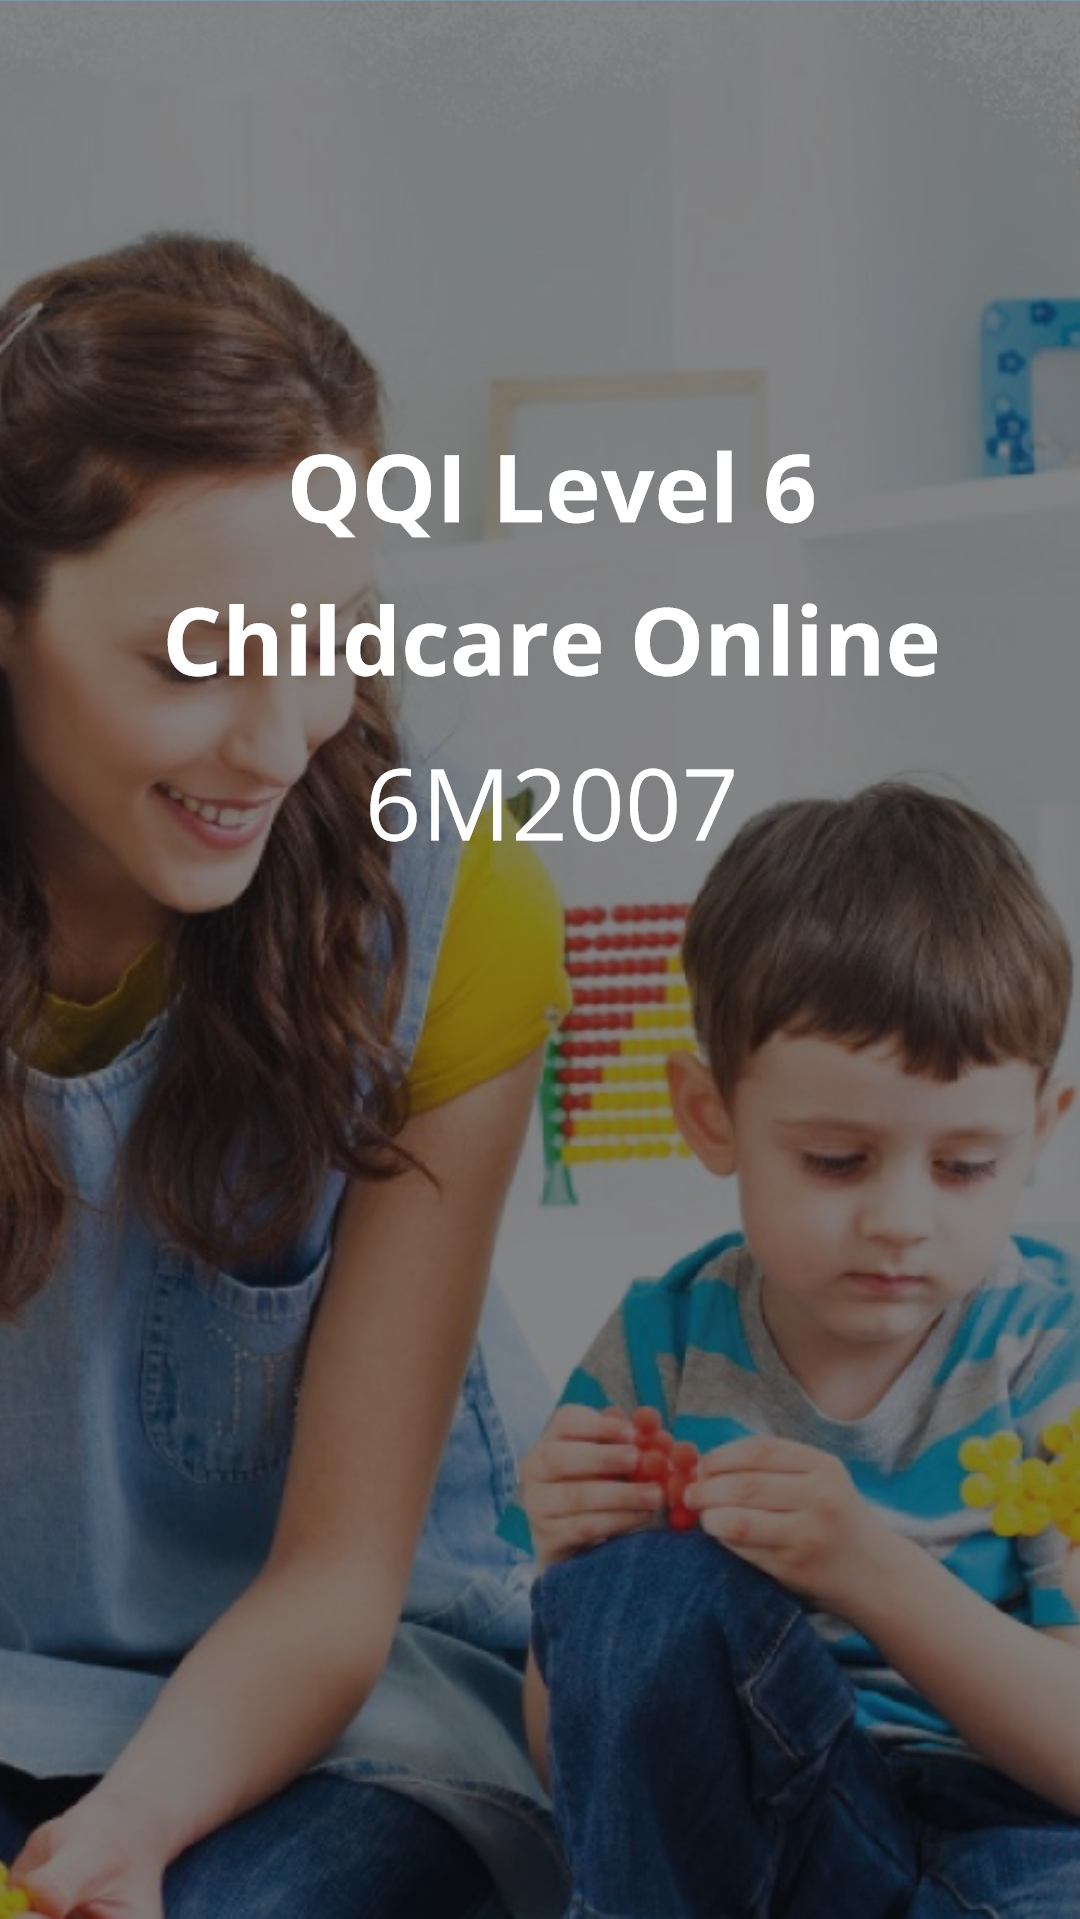 level 6 childcare